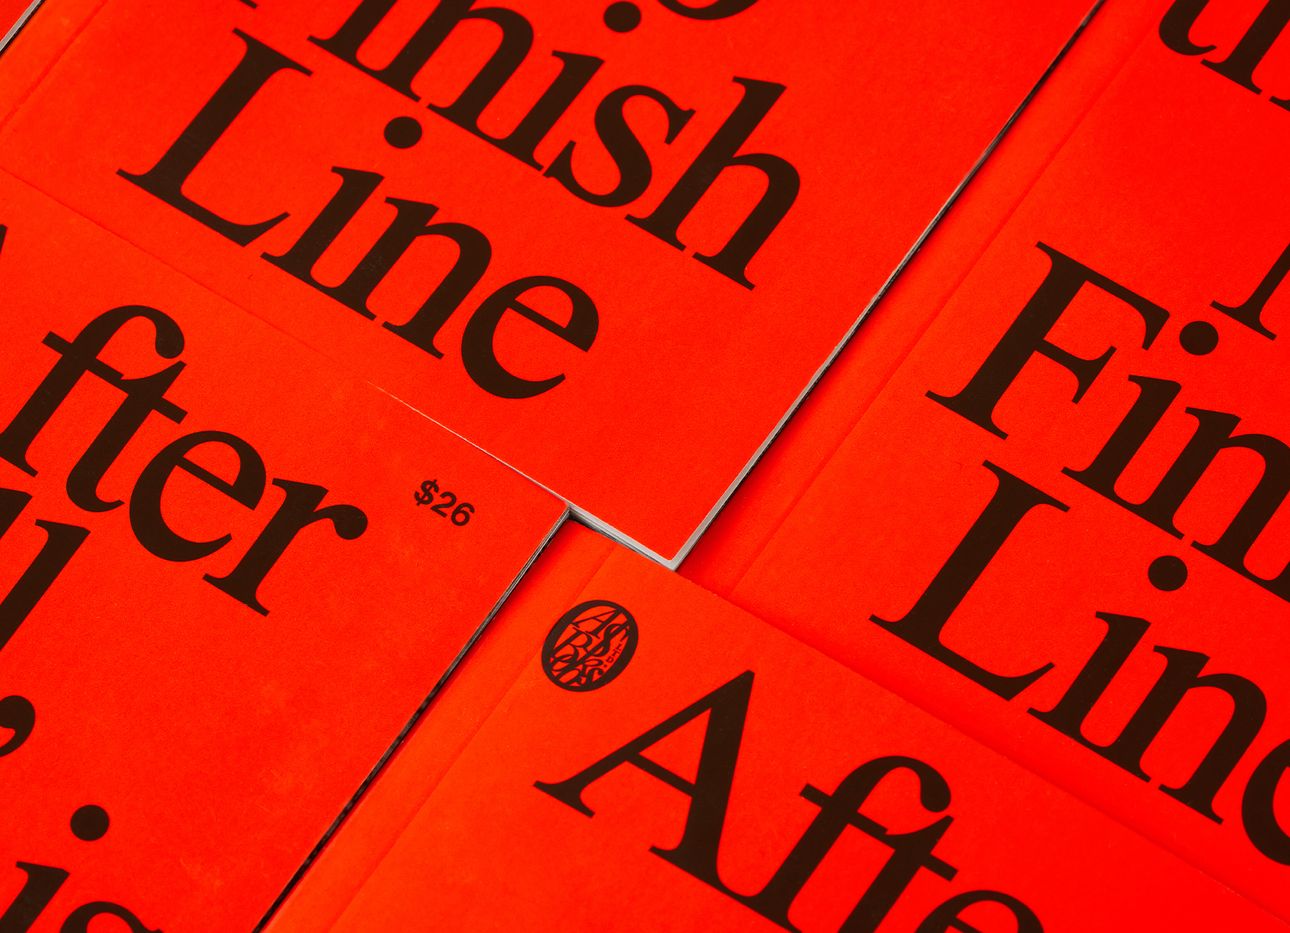 Overlapping copies of “No Finish Line.” (Photo: Weston Colton. Courtesy Nike)